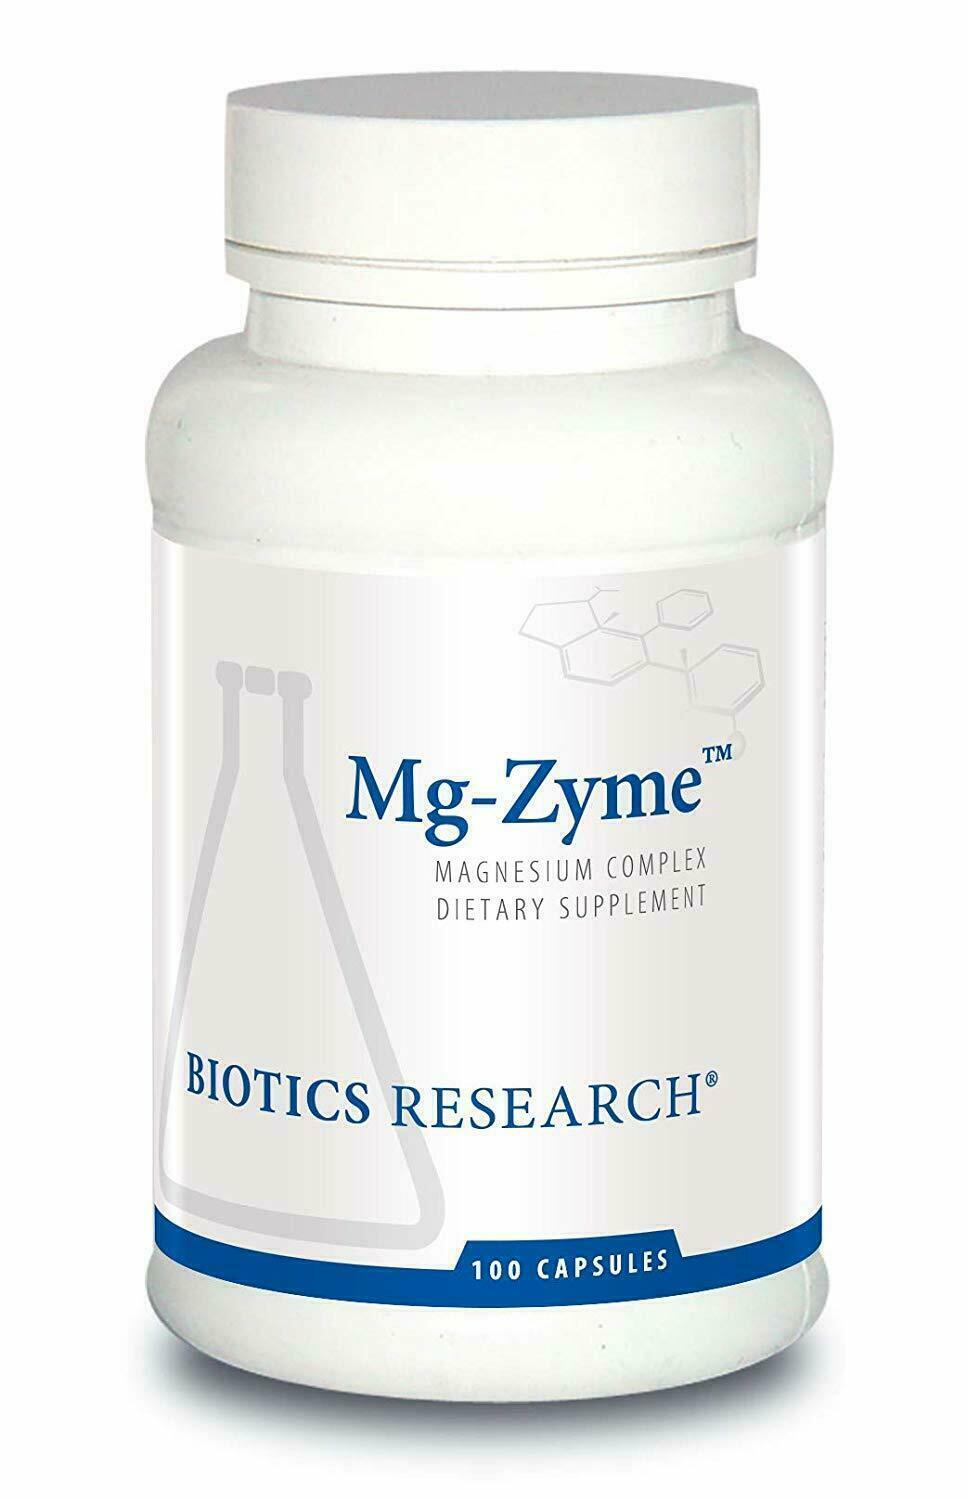 Biotics Research MgZyme Magnesium Glycinate 100 c - Improves Sleep, exp 03/2022